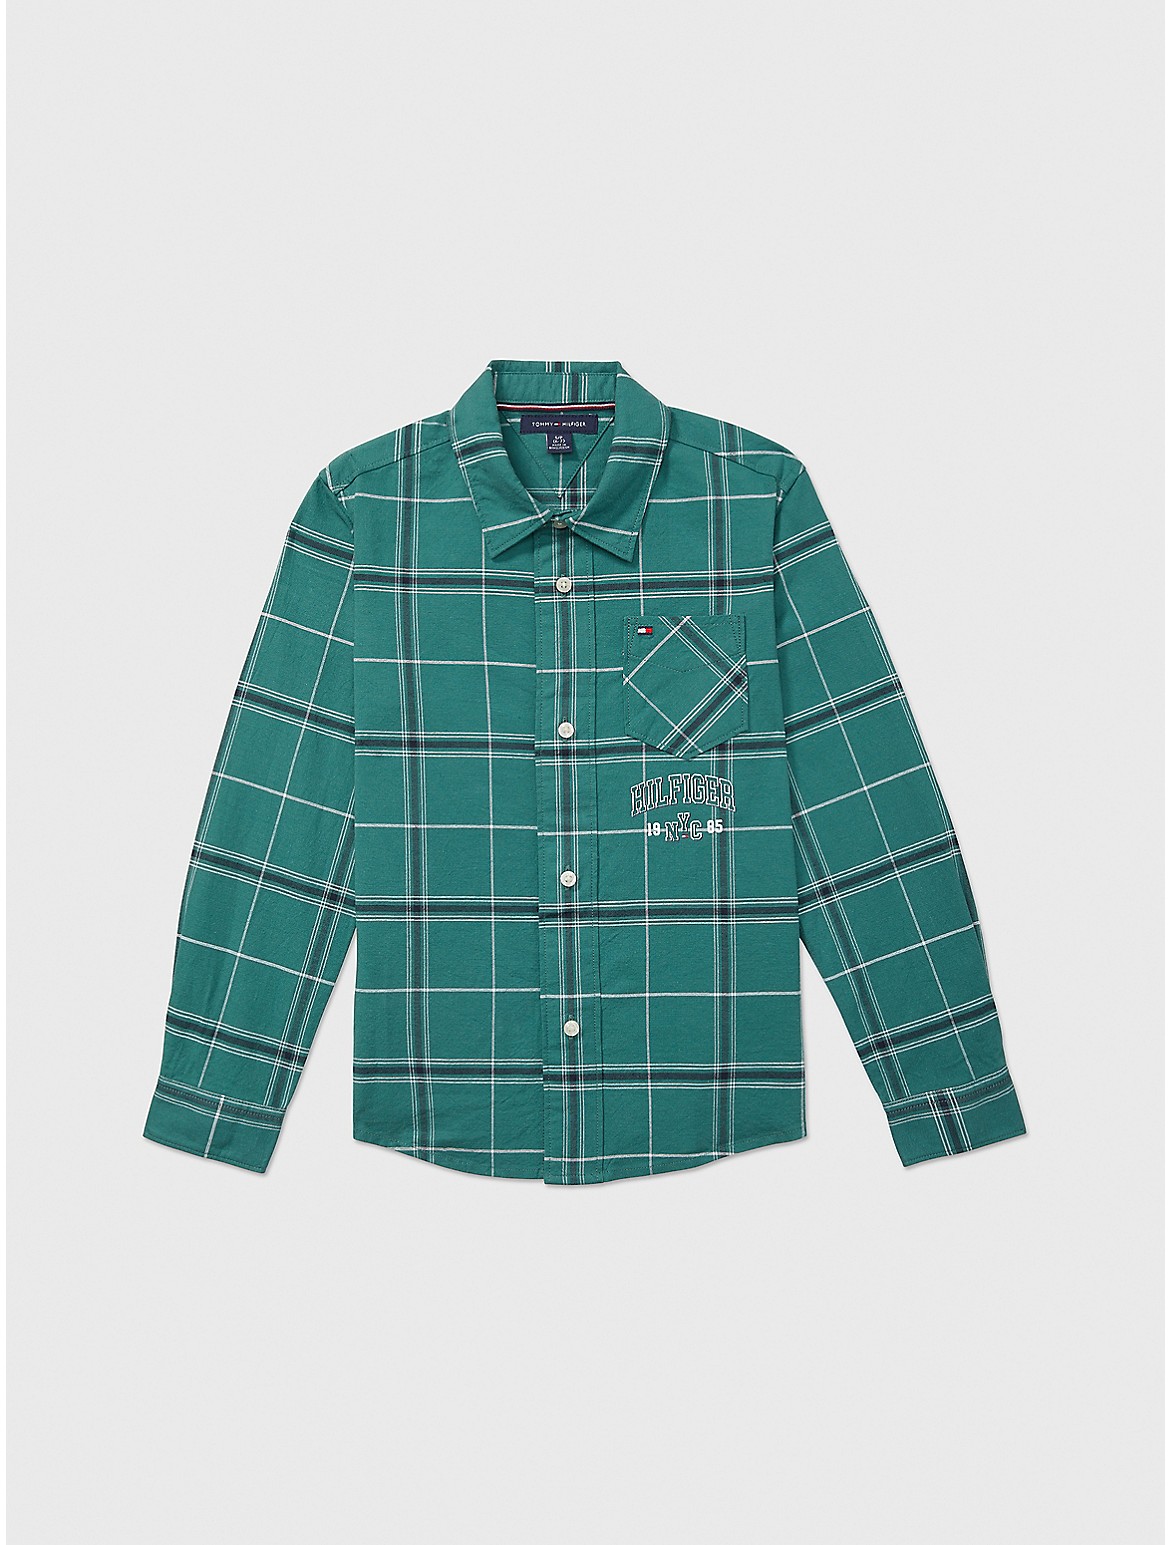 Tommy Hilfiger Boys' Check Oxford Shirt - Green - L